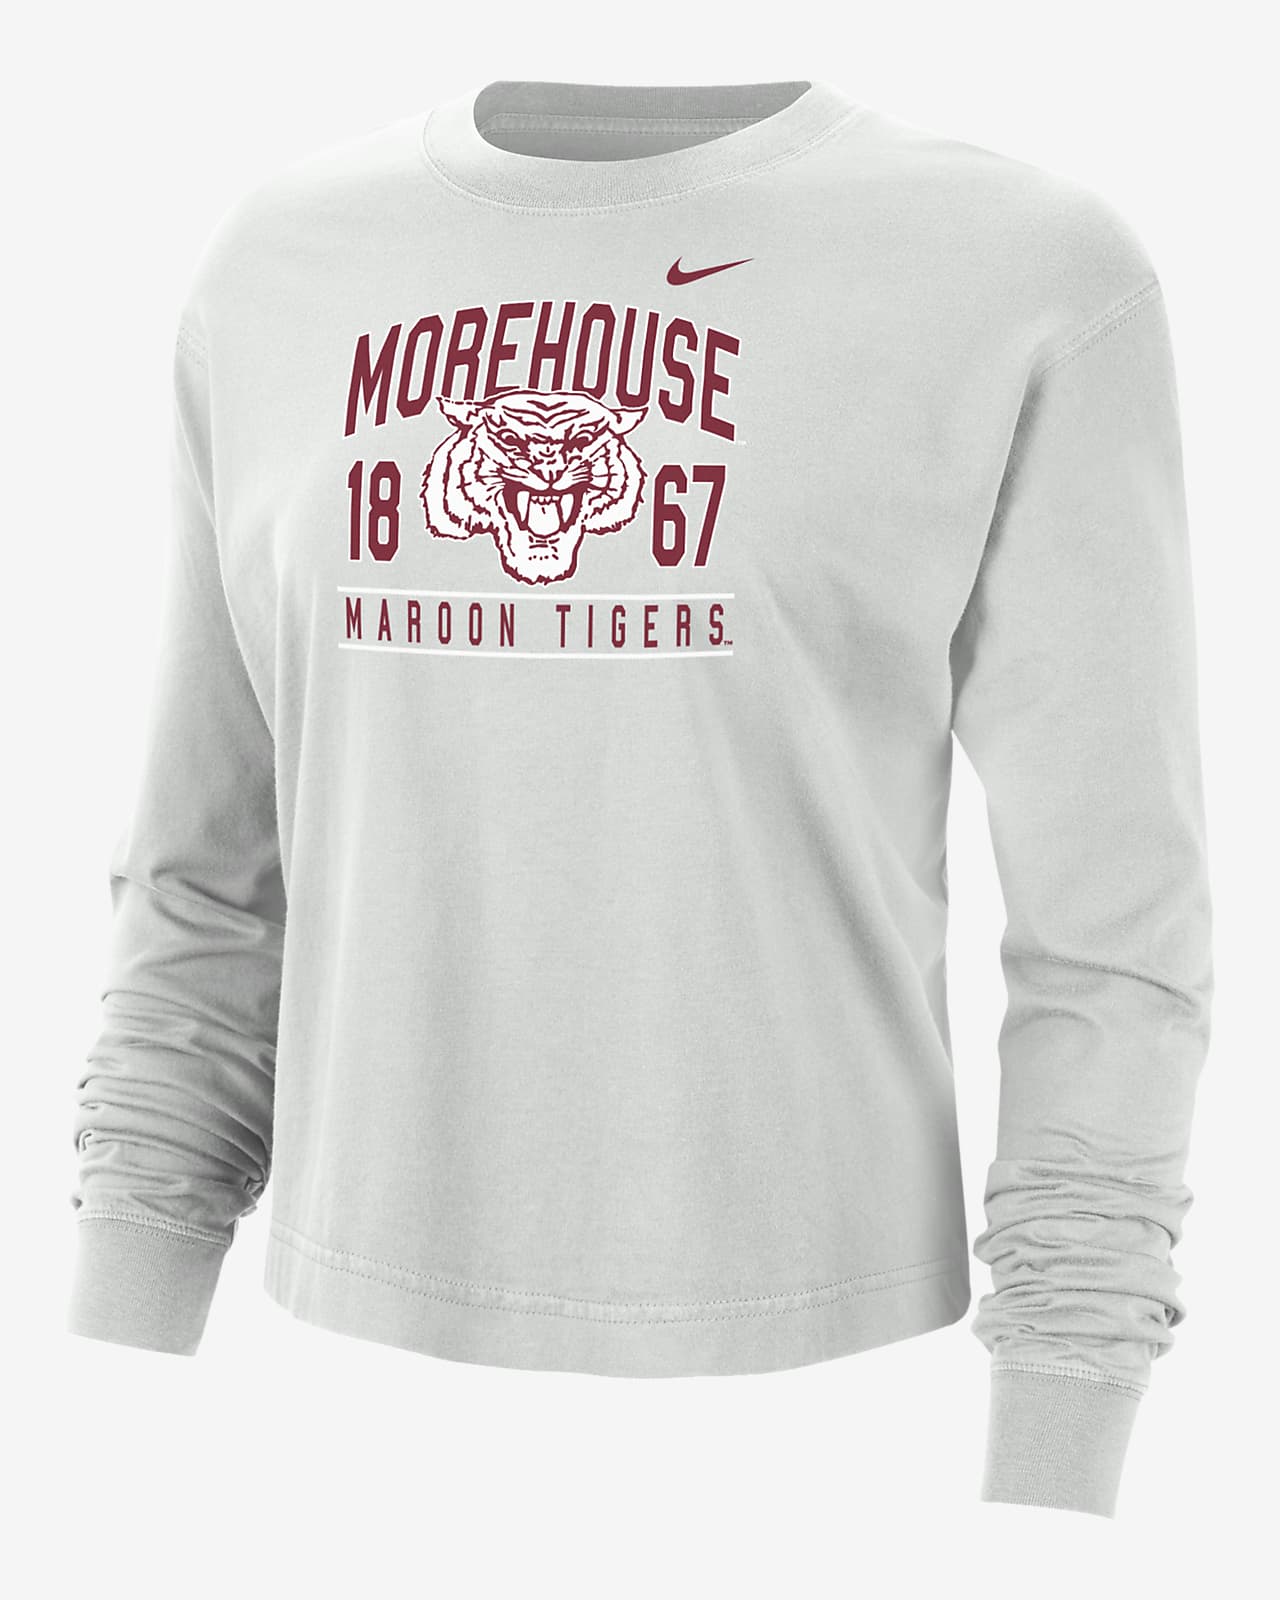 Morehouse Women's Nike College Boxy Long-Sleeve T-Shirt